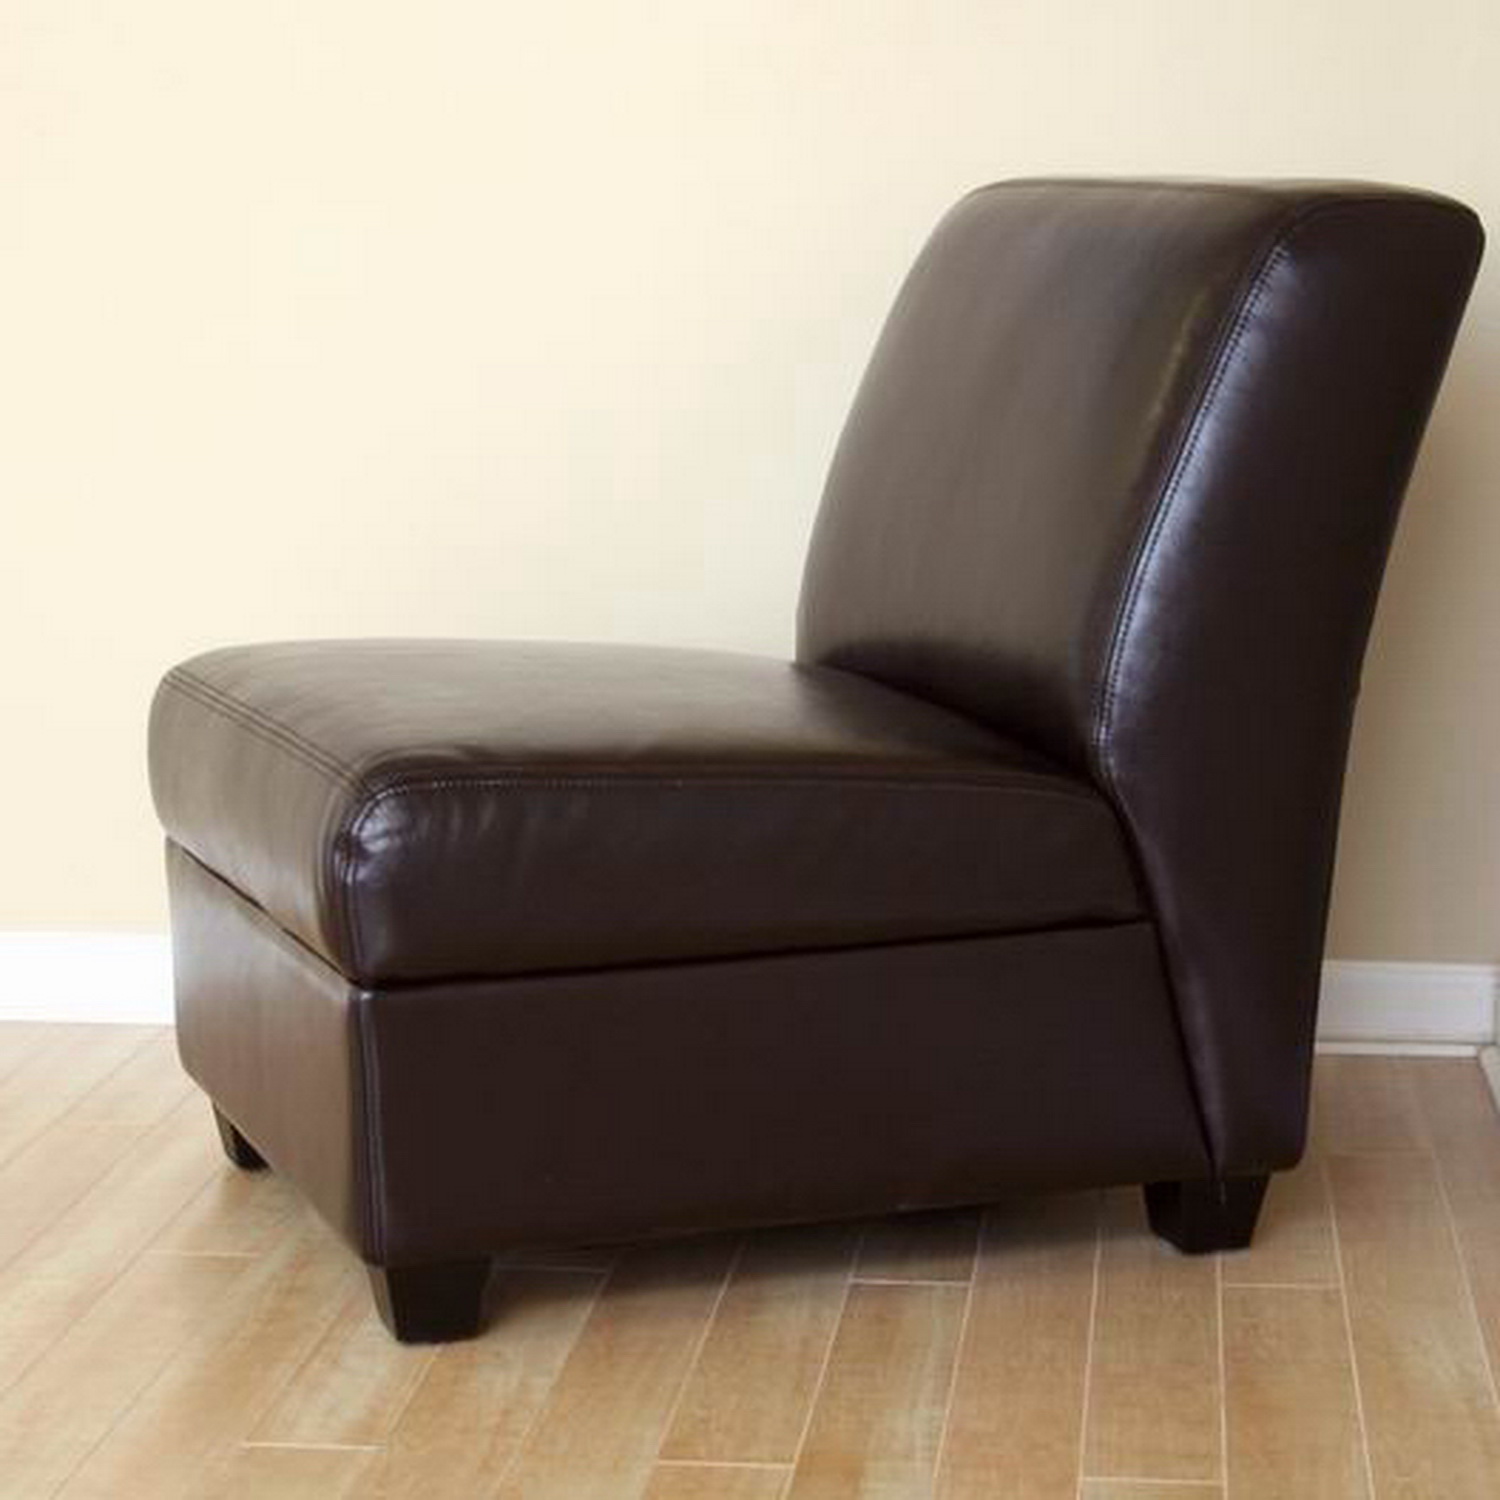 Baxton Studio Dark Brown Armless Club Chair